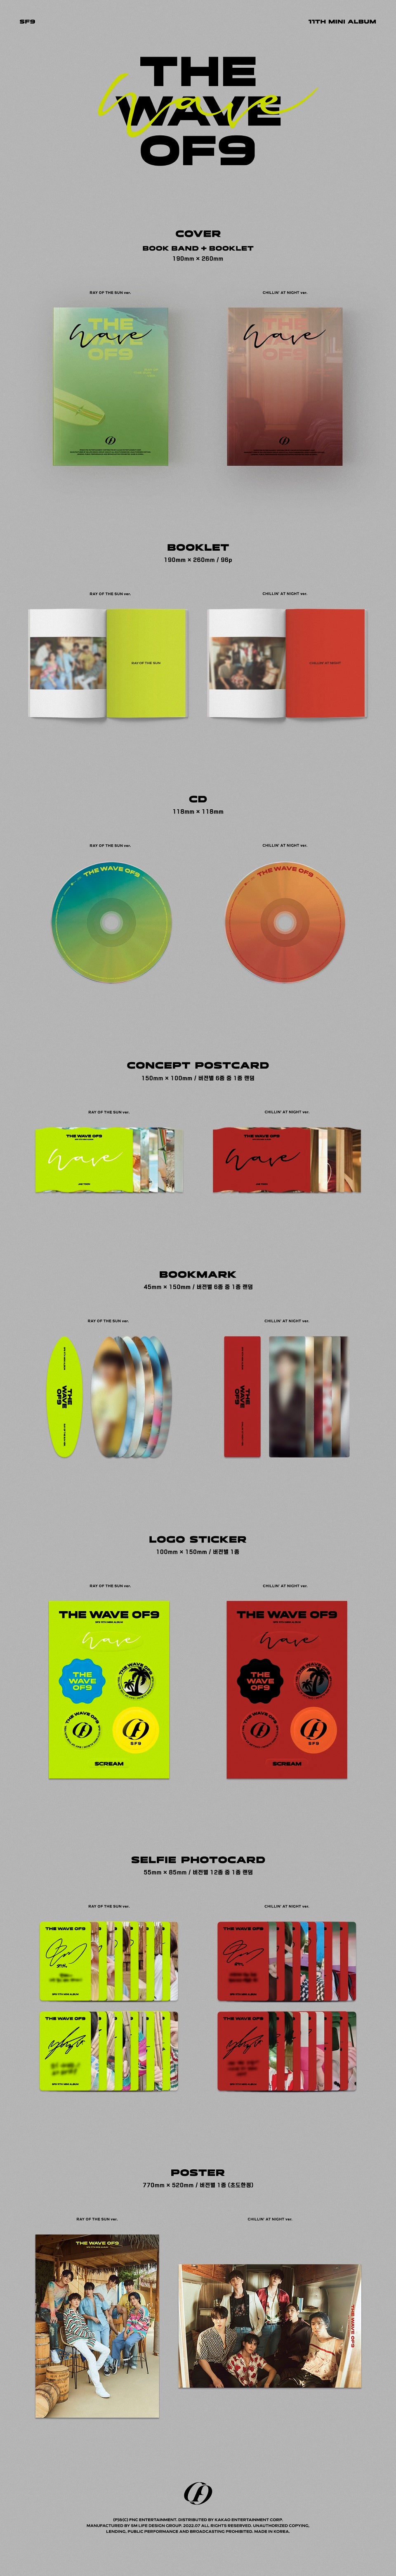 K-Pop CD SF9 - 11th Mini Album 'The Wave of9'